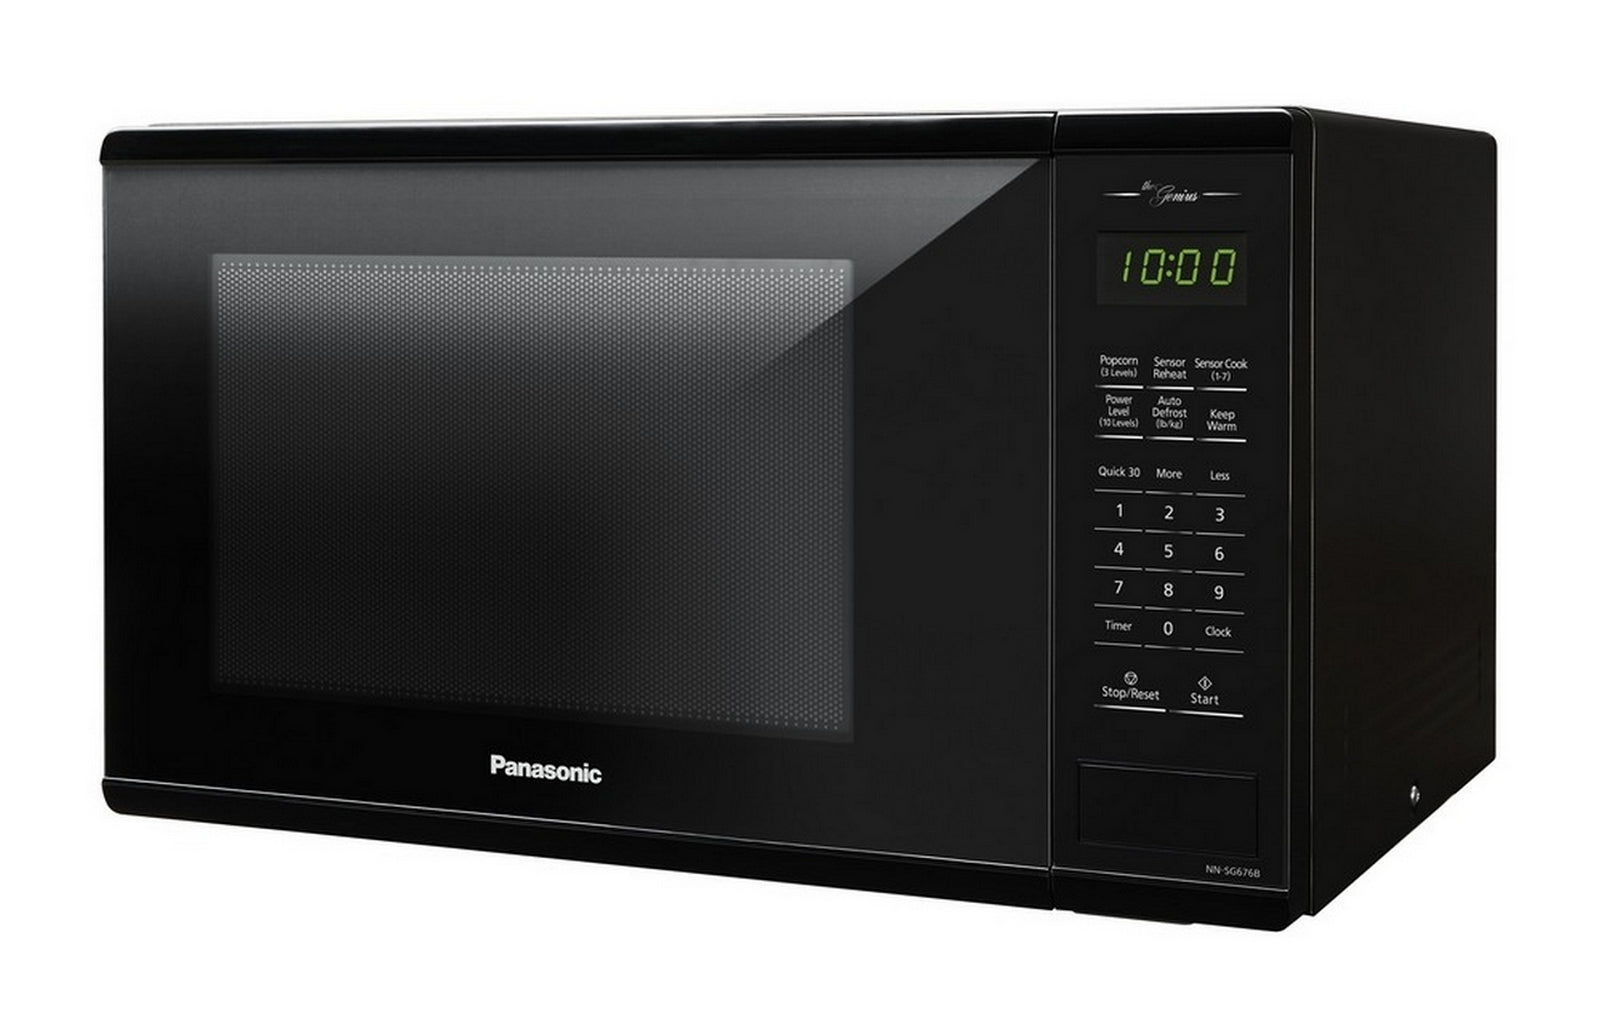 Panasonic - 1.3 cu. Ft  Built In Microwave in Black - NNSG676B